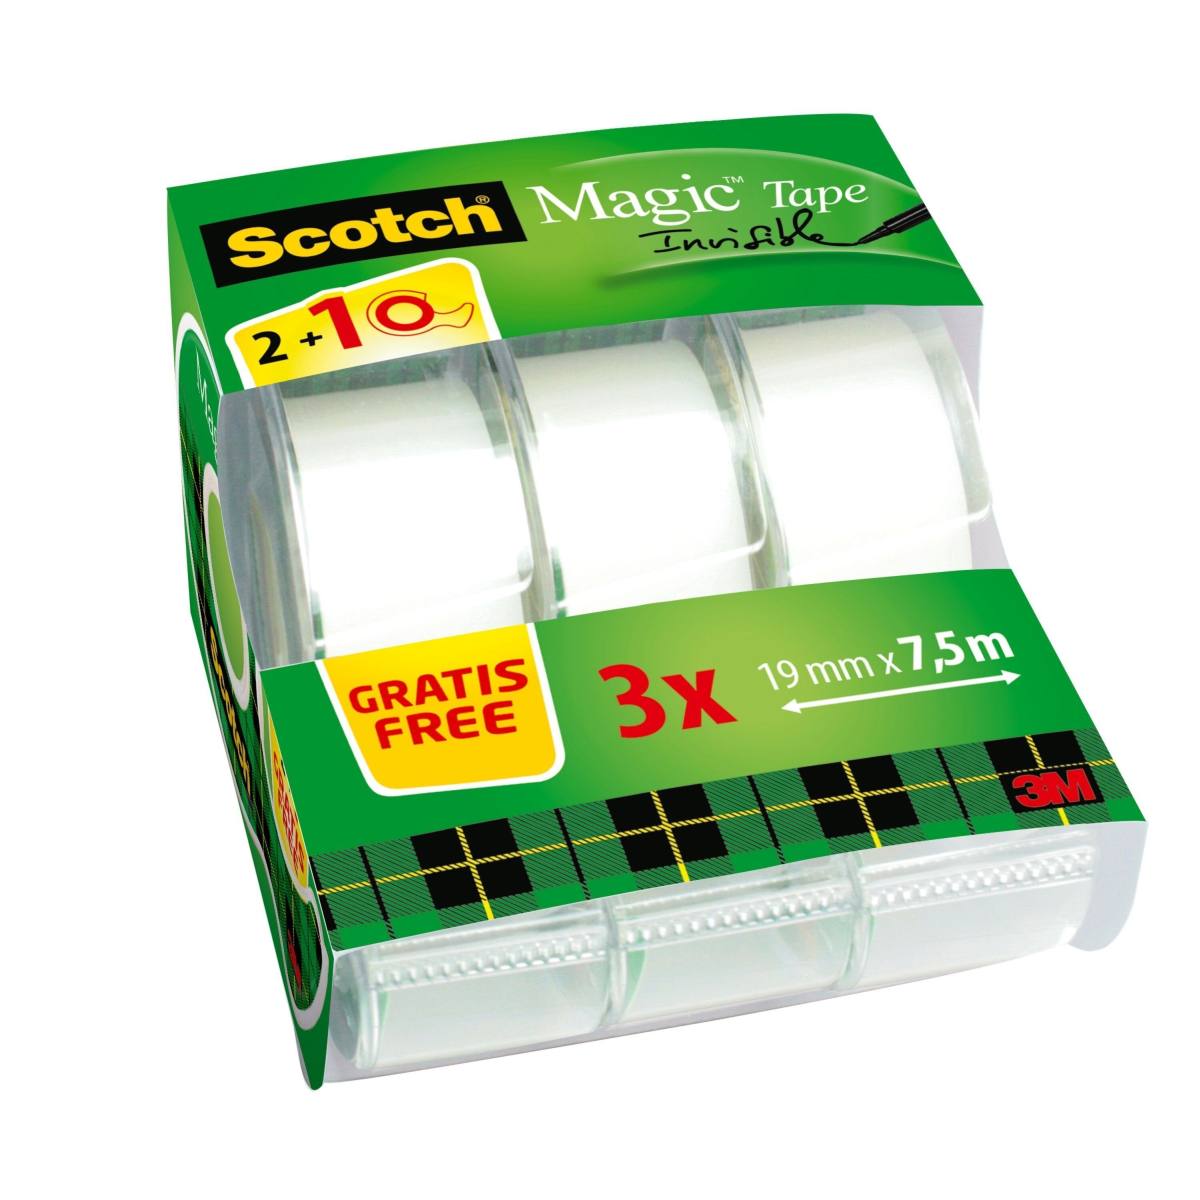 3M Scotch Magic Adhesive Tape Caddy Pack 2 rollos + 1 GRATIS 19 mm x 7,5 m + dispensador manual